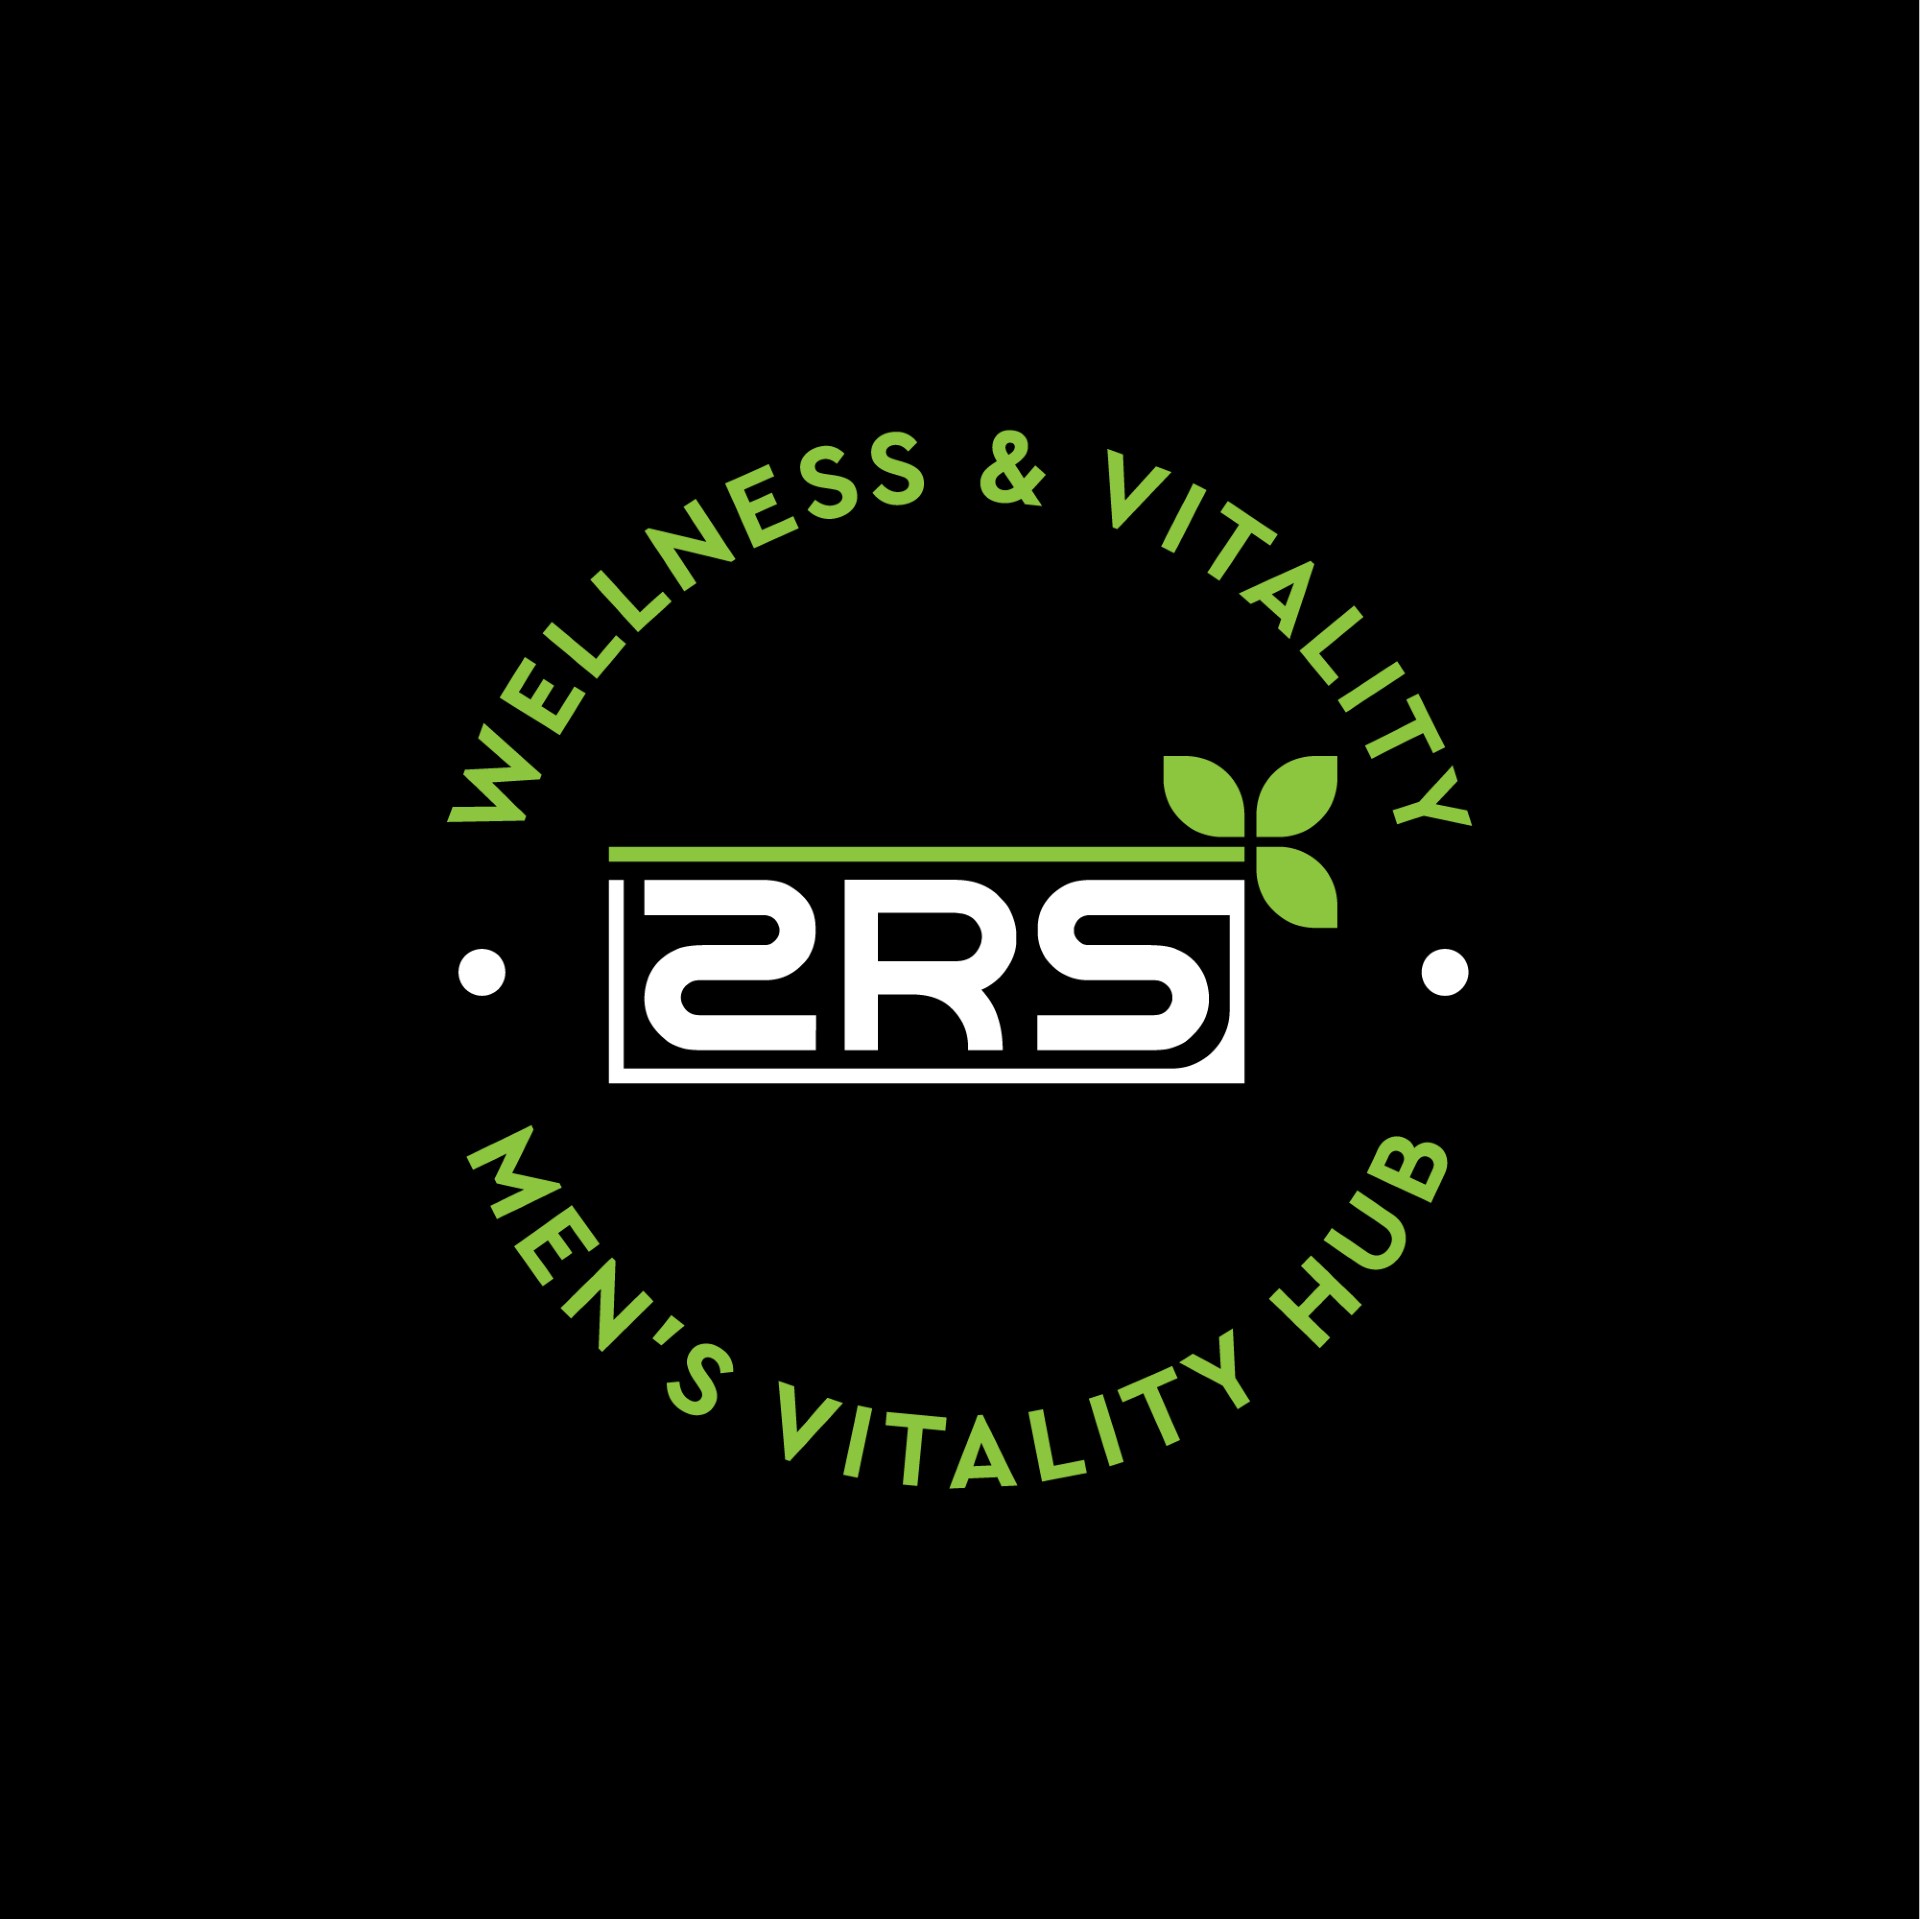 https://growthzonecmsprodeastus.azureedge.net/sites/927/2019/12/SRS-Wellness-and-Vitality.jpg